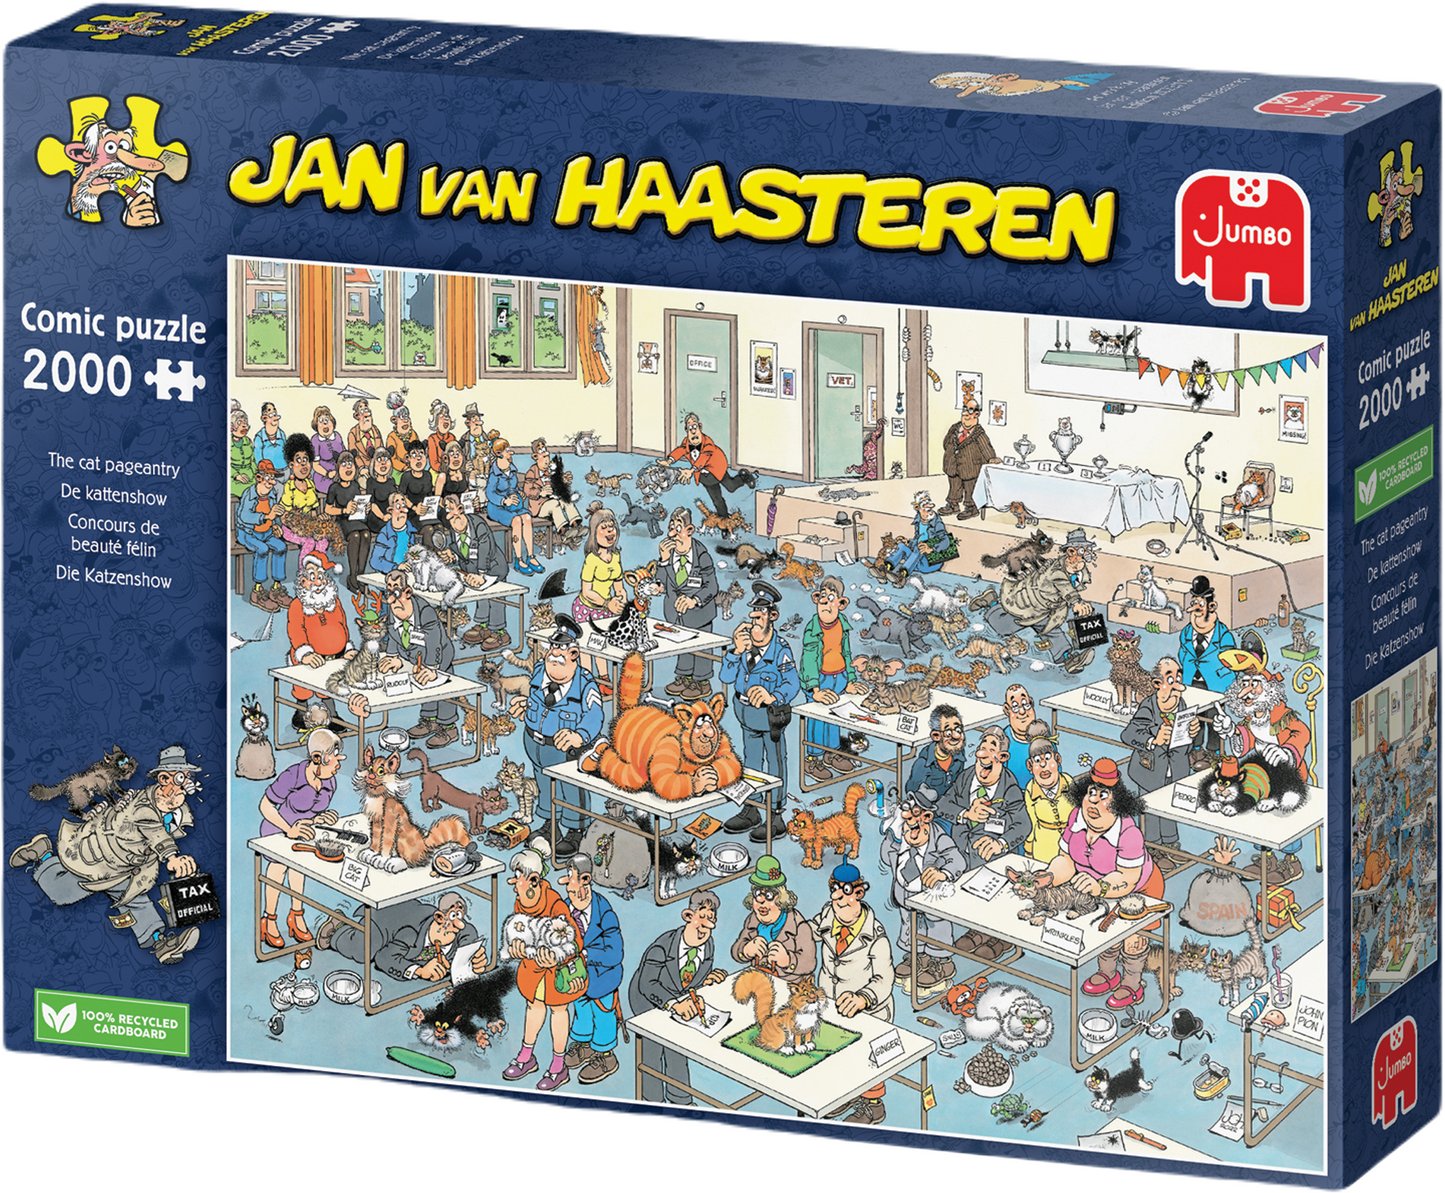 Jan Van Haasteren - The Cat Pageantry - 2000 Piece Jigsaw Puzzle